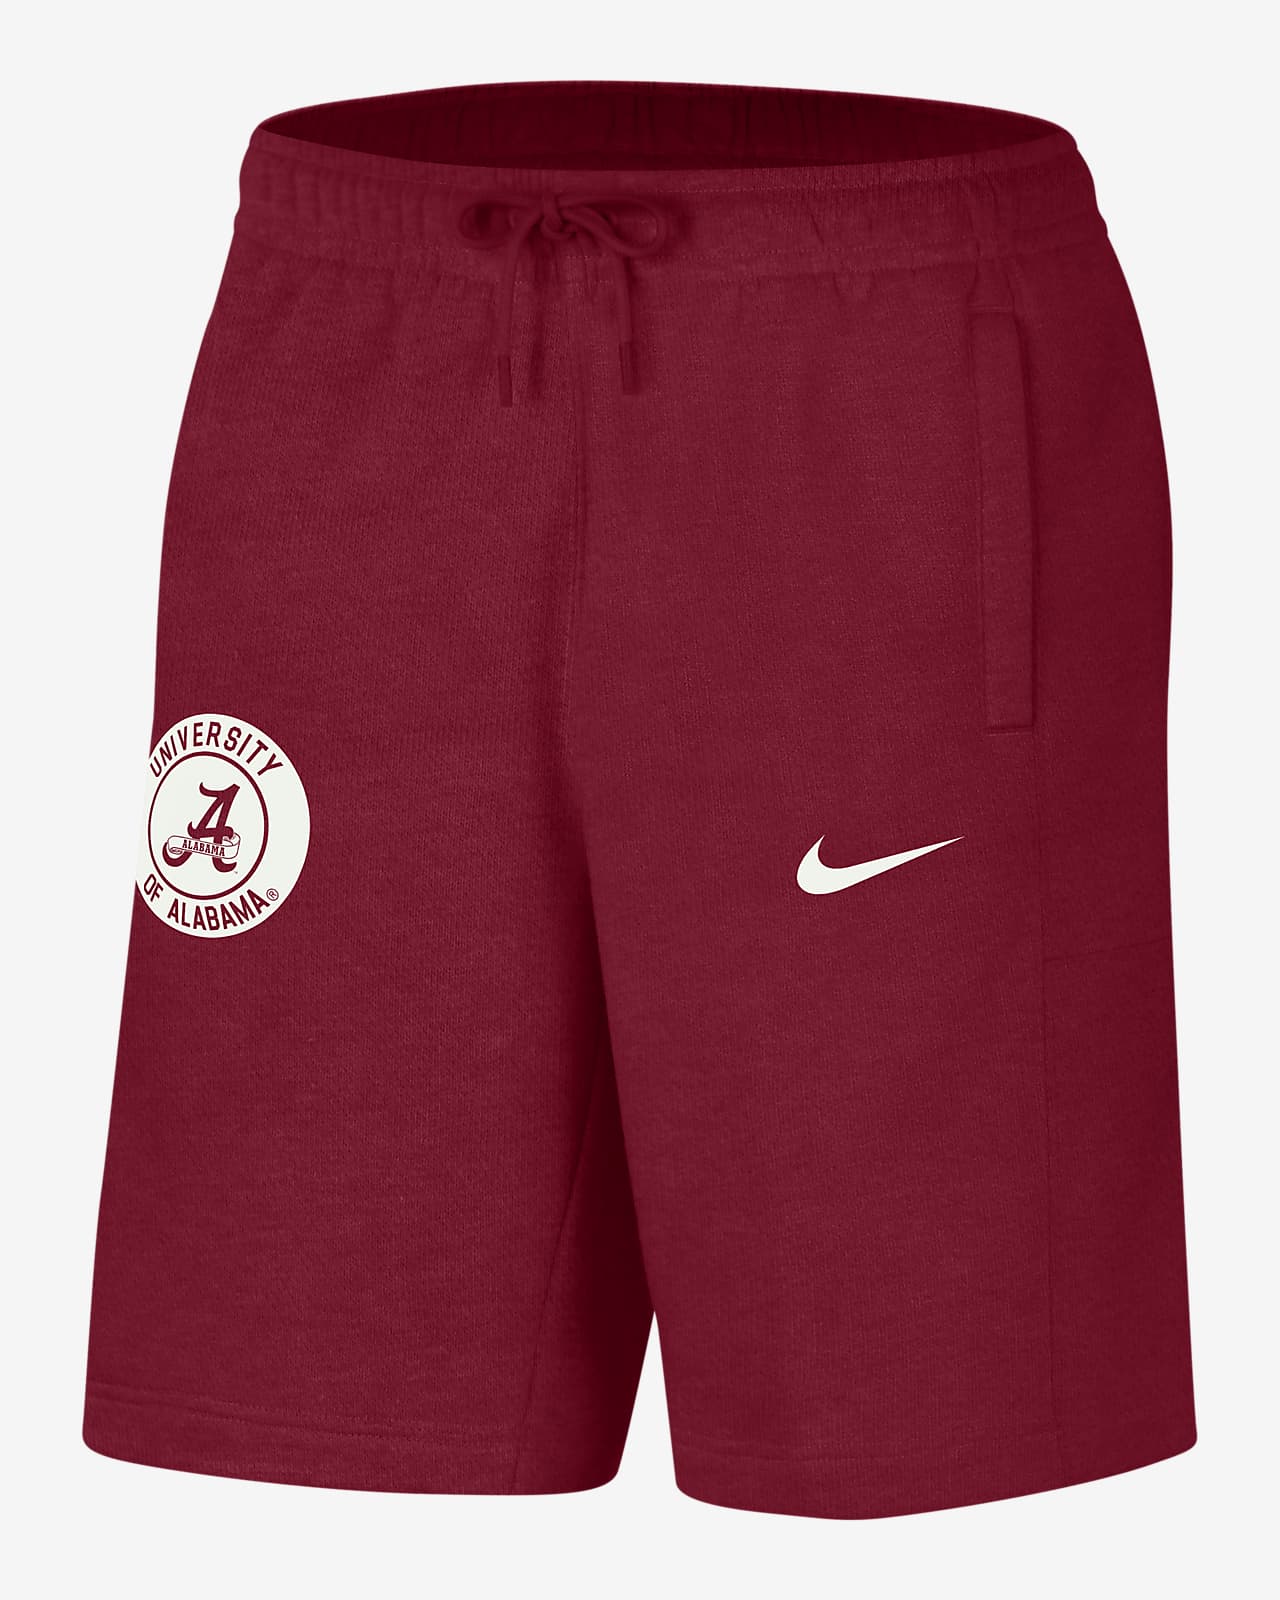 Shorts Nike College para hombre Alabama